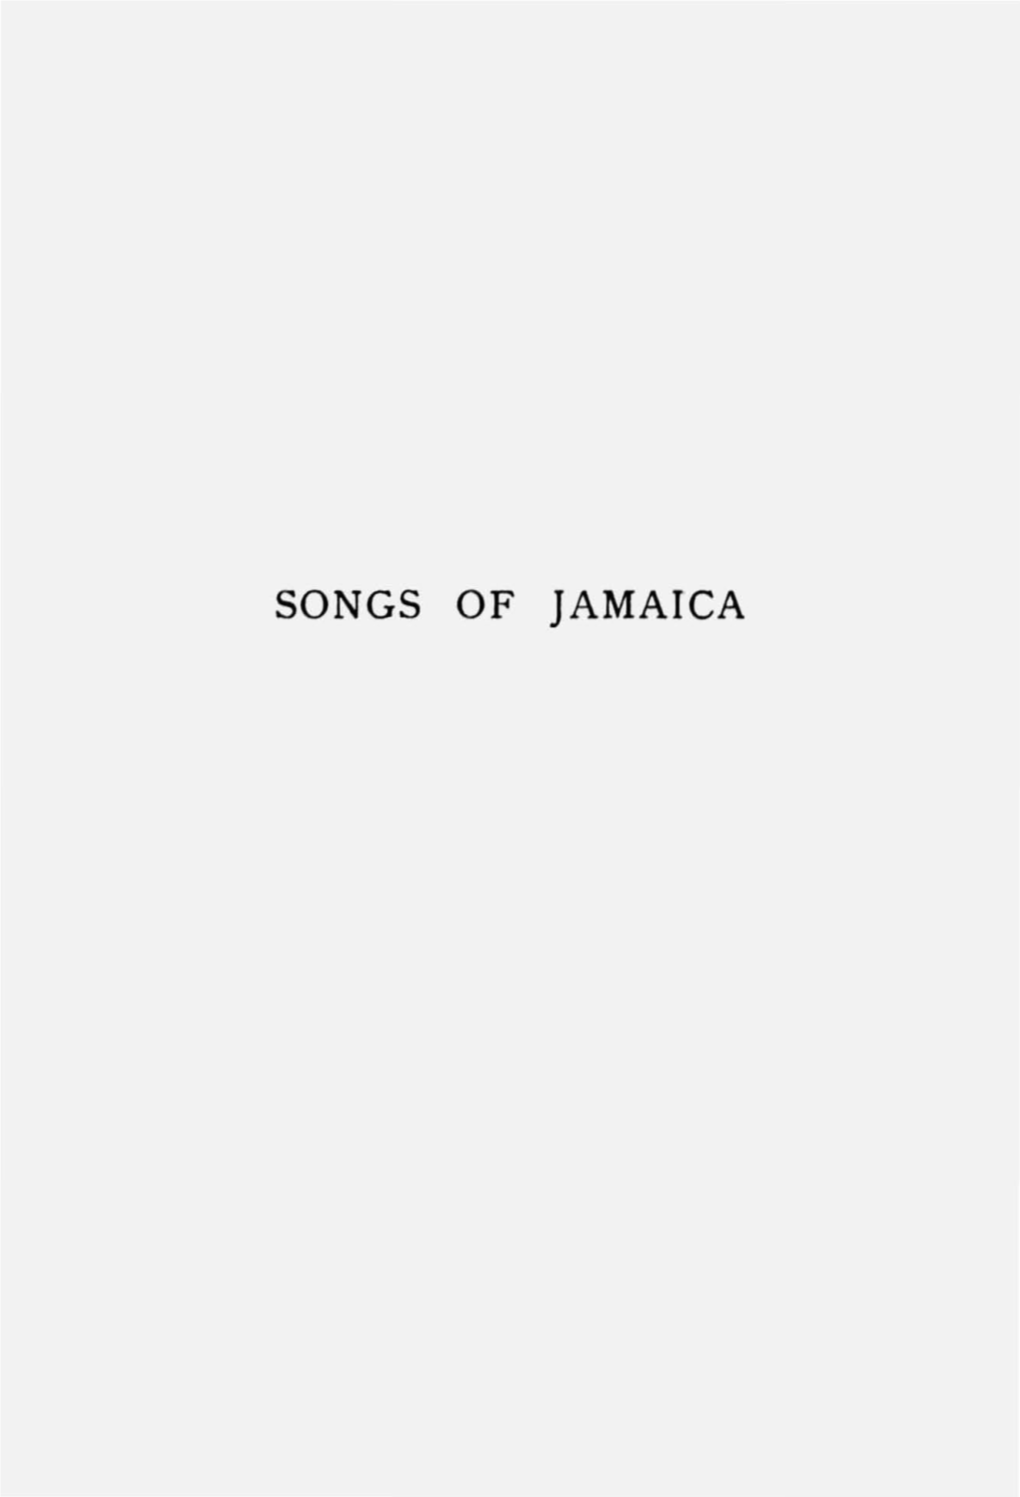 Songs of Jamaica Cla Uue .\I'kay